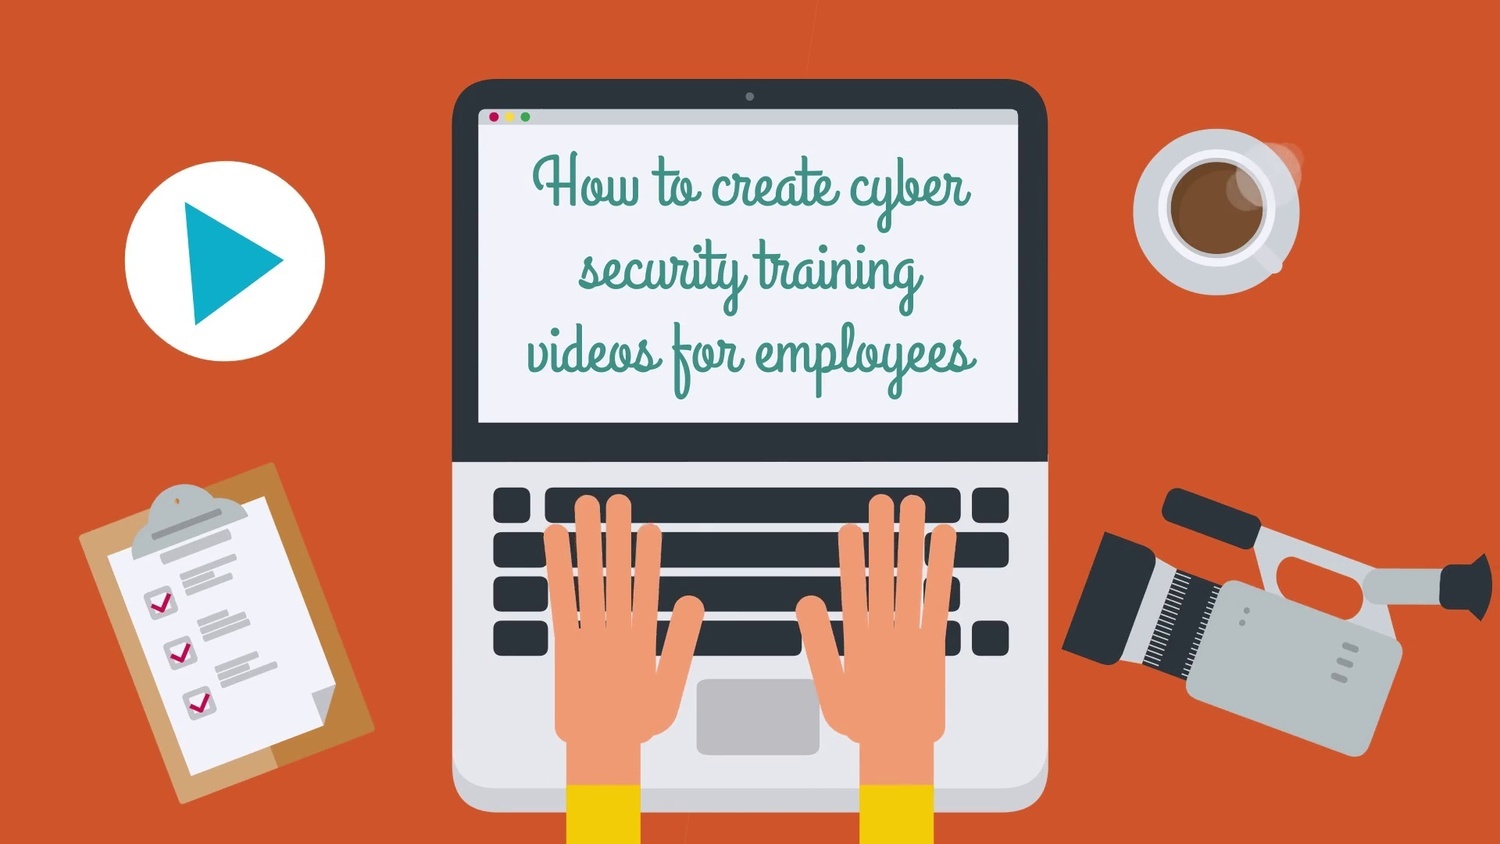 Make cybersecurity training videos